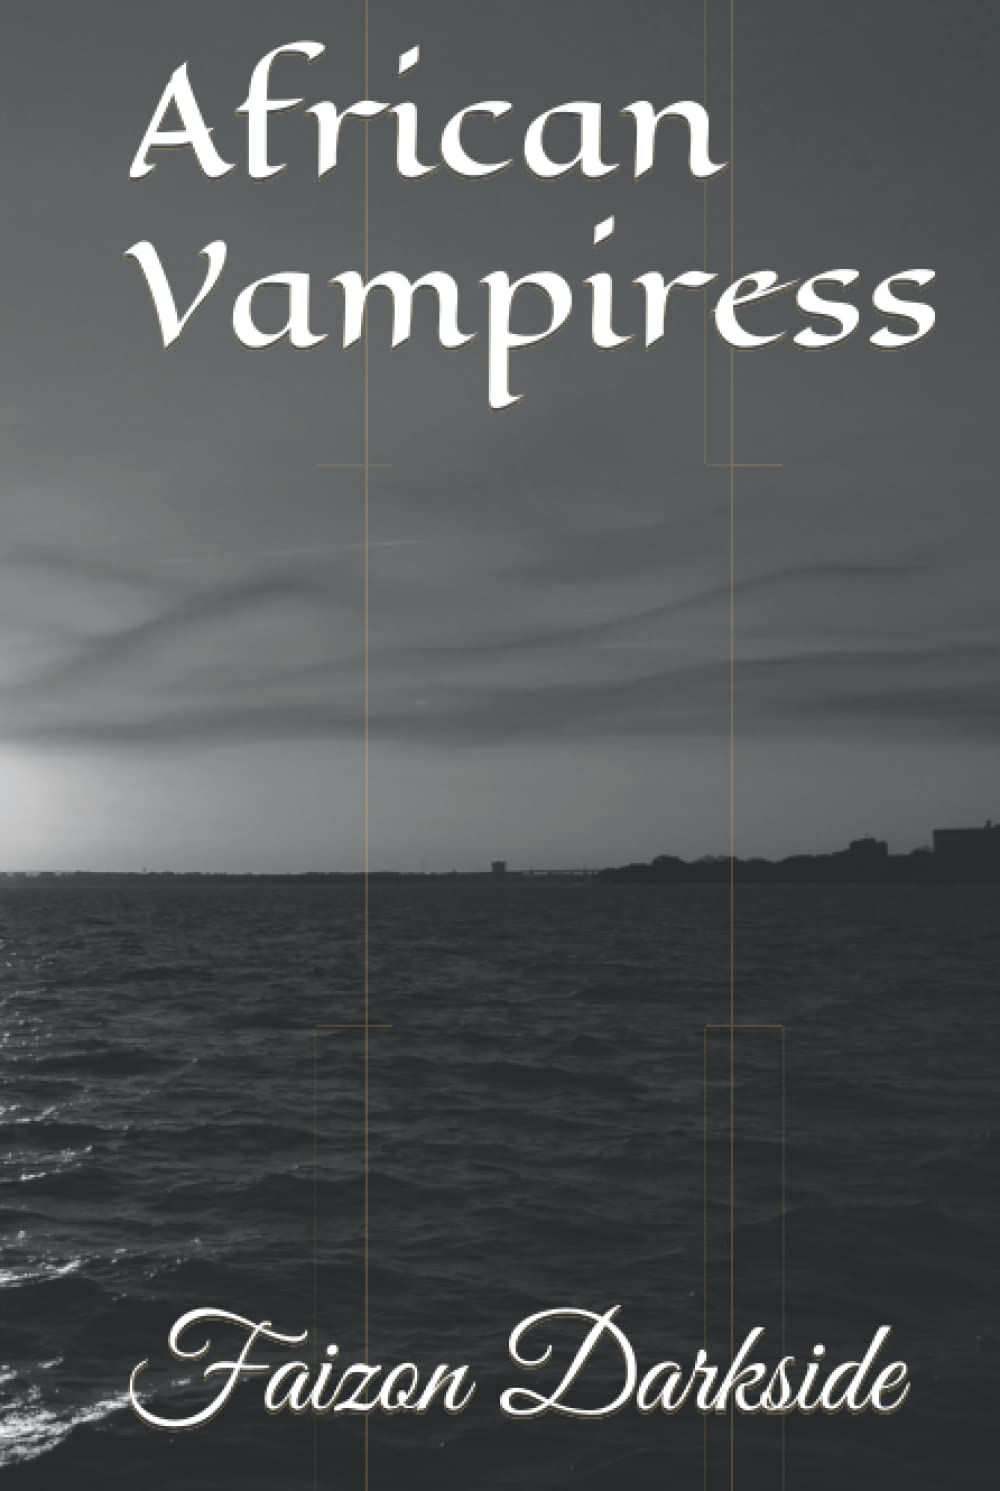 African Vampiress book image